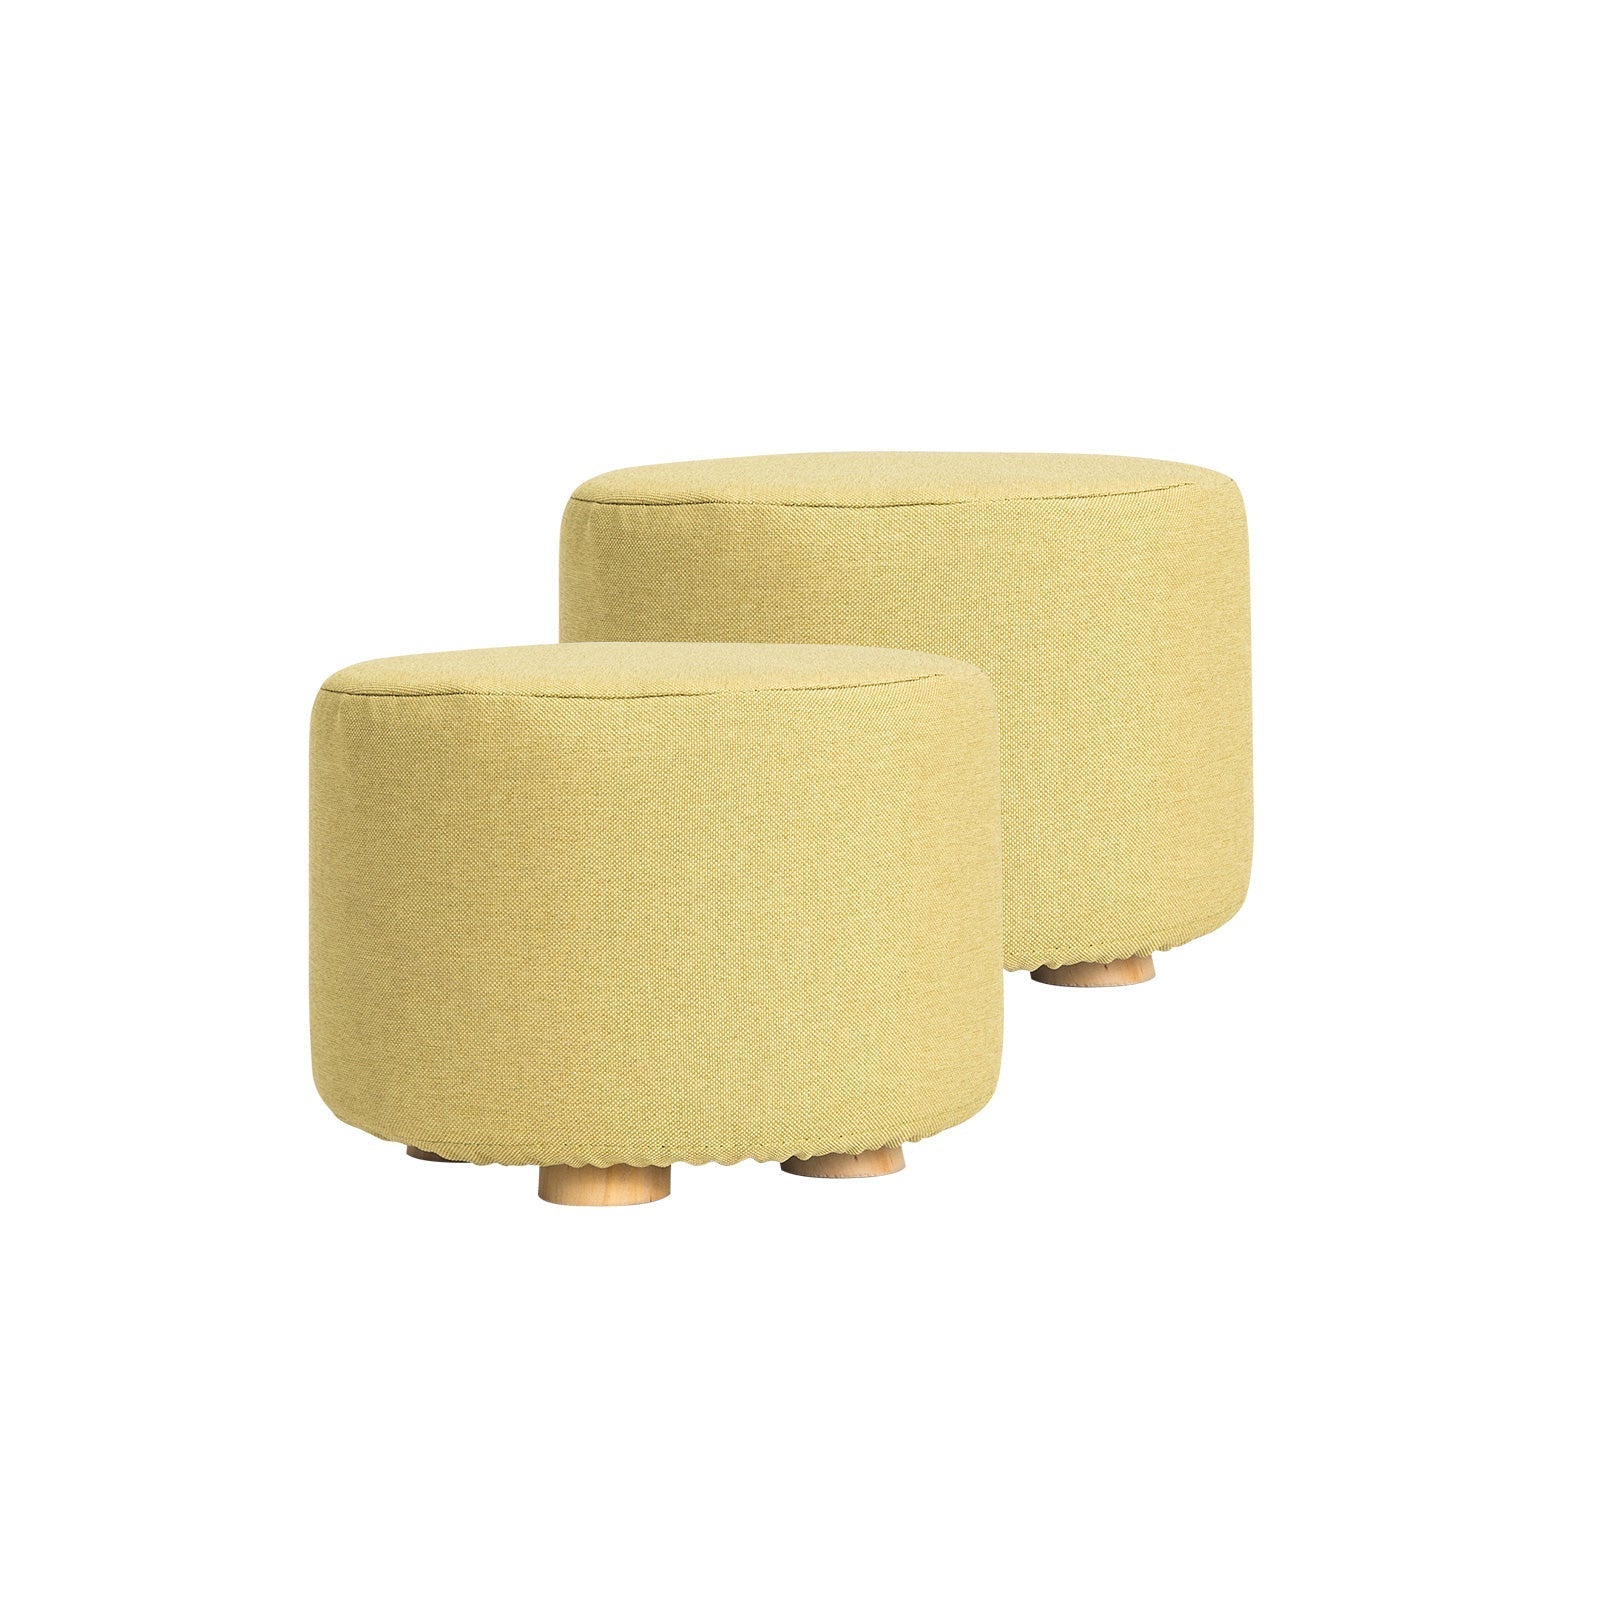 La Bella 2 Set Mustard Yellow Fabric Ottoman Round Wooden Leg Foot Stool Fast shipping On sale